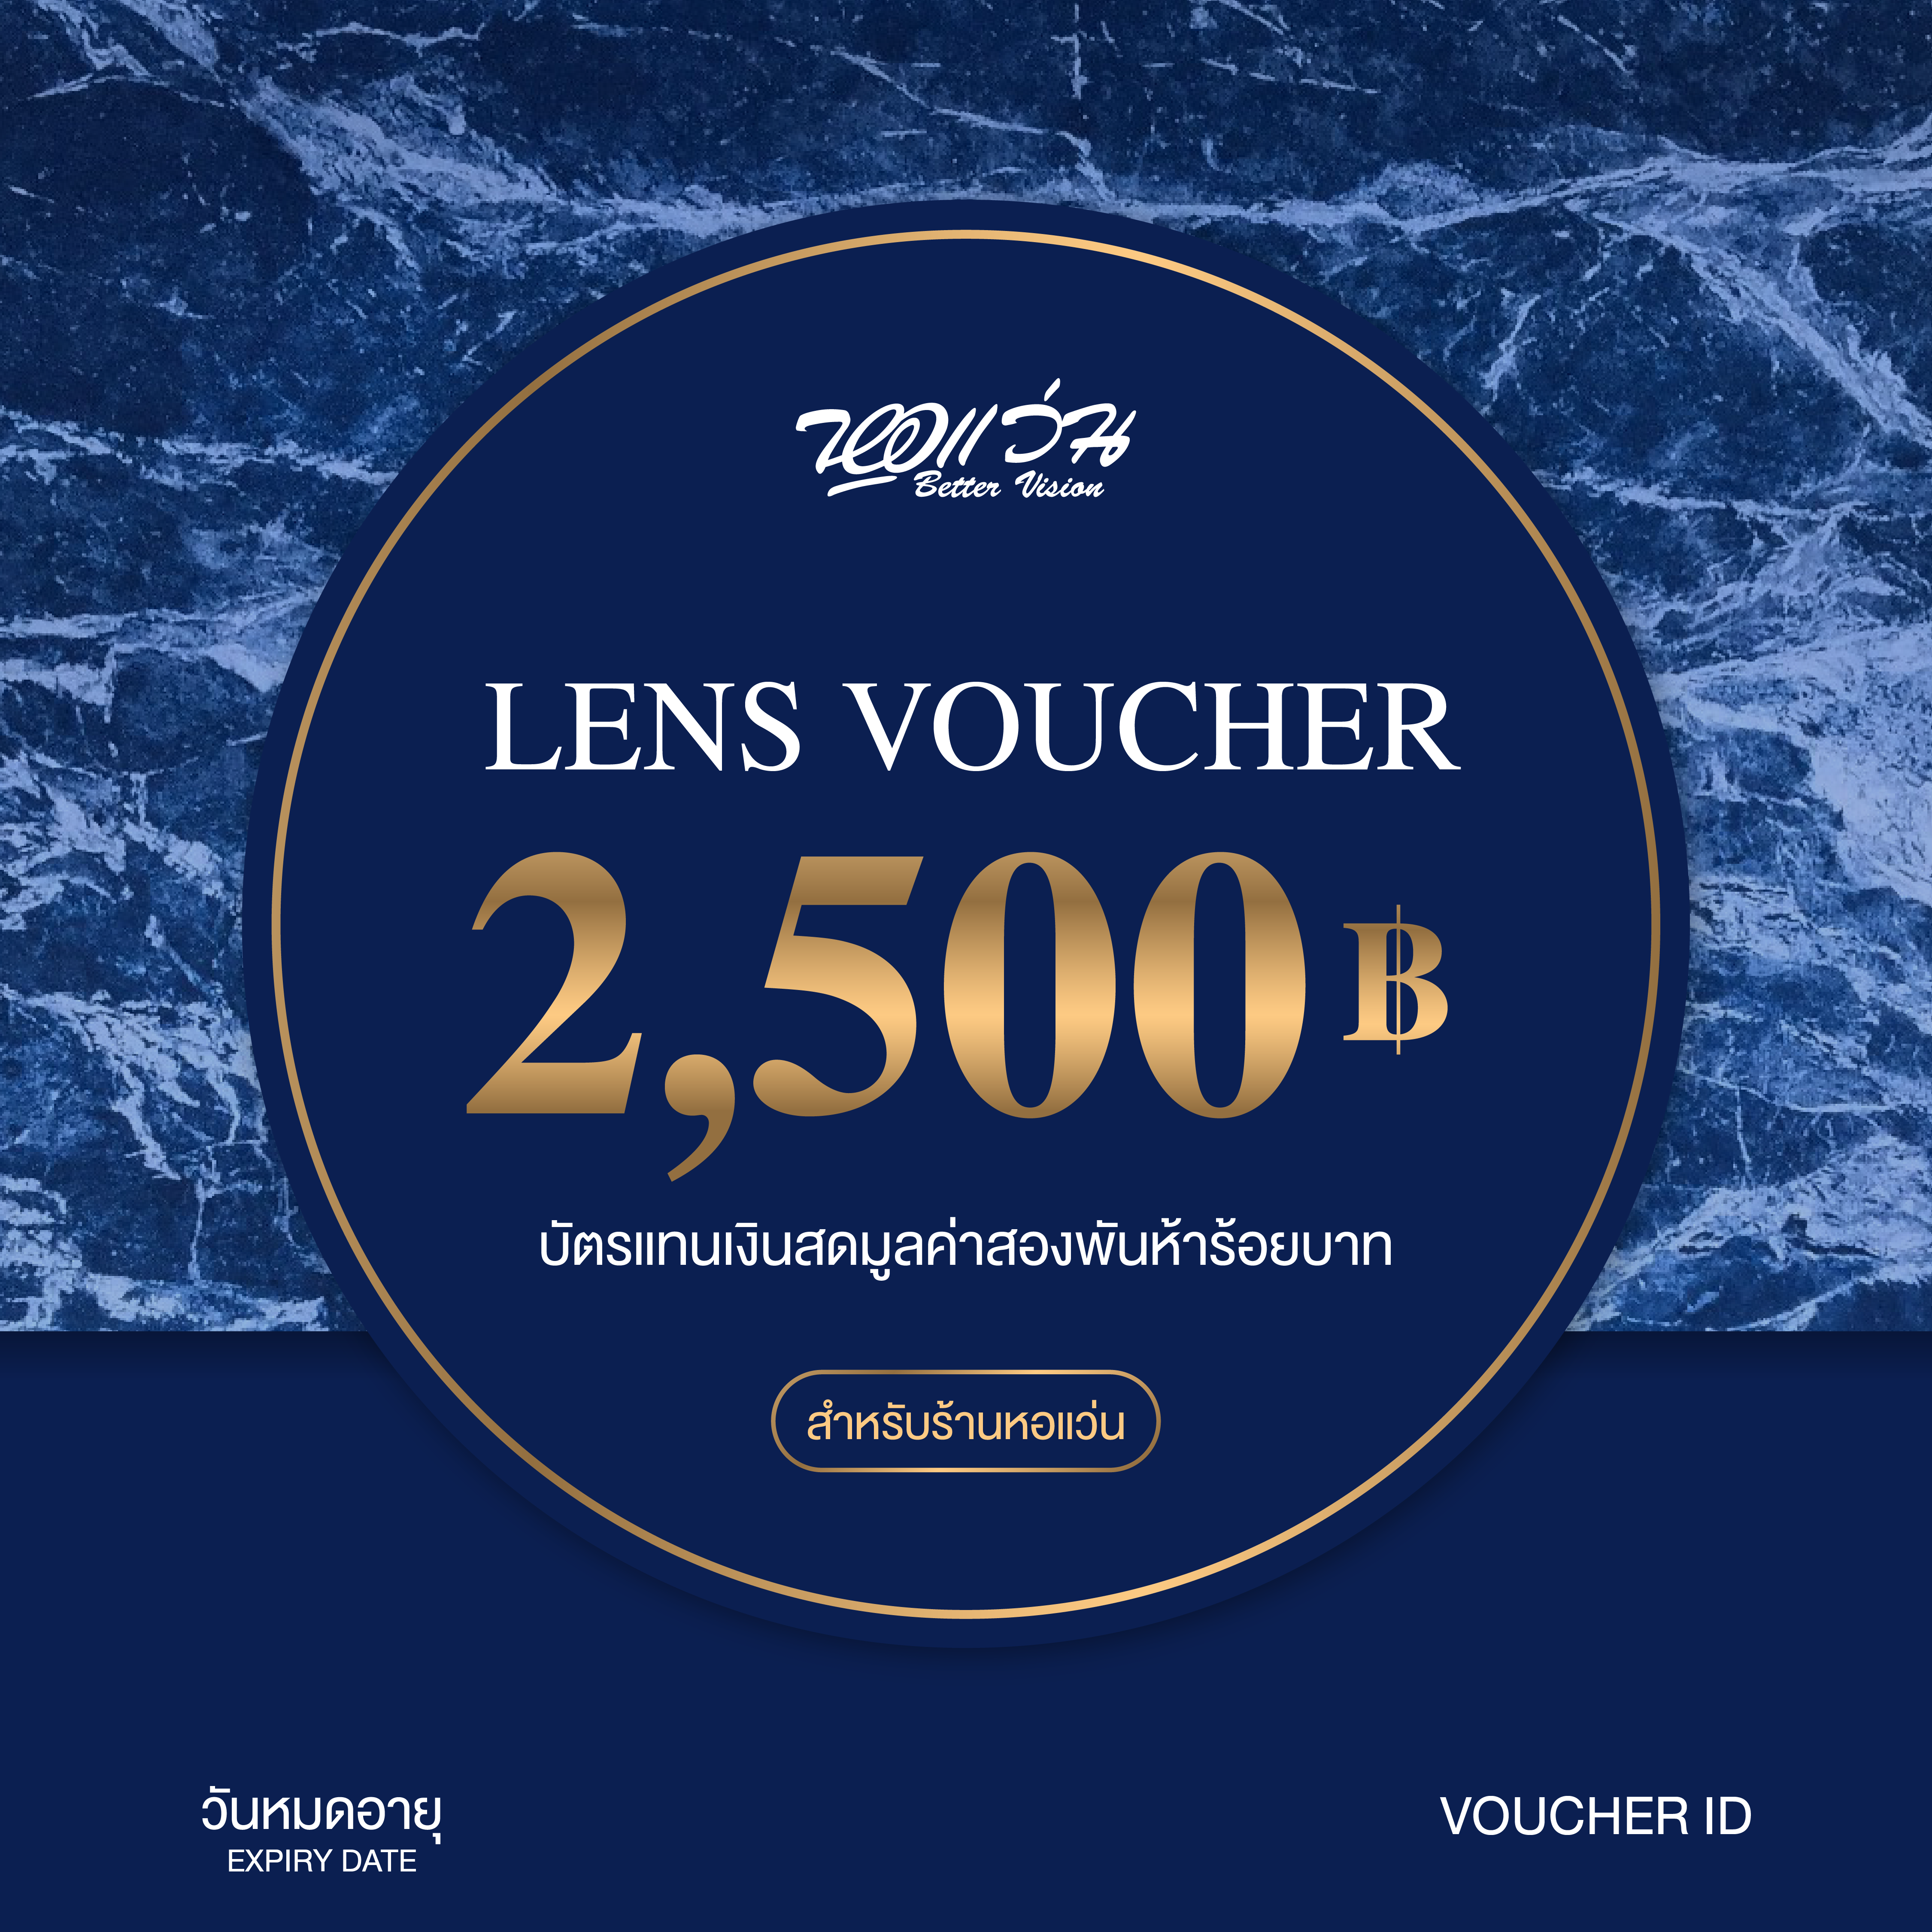 [E-Voucher] หอแว่น Better Vision - บัตรแทนเงินสดค่าตัดเลนส์: มูลค่า 2,500 BV-VOUCHER